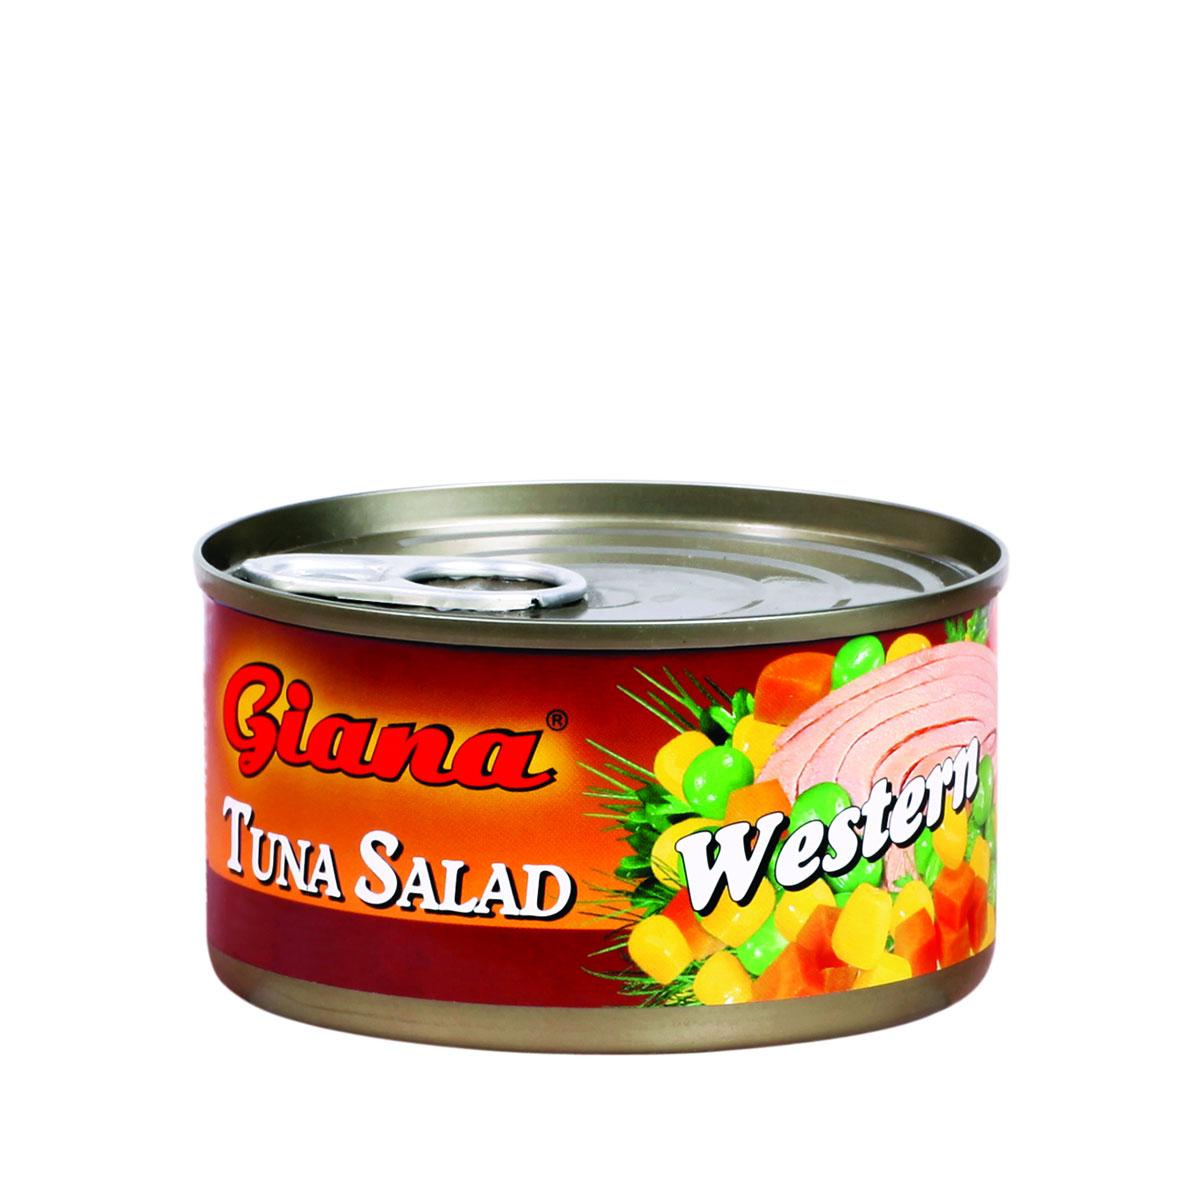 Selected image for GIANA Tuna Western salata 185g